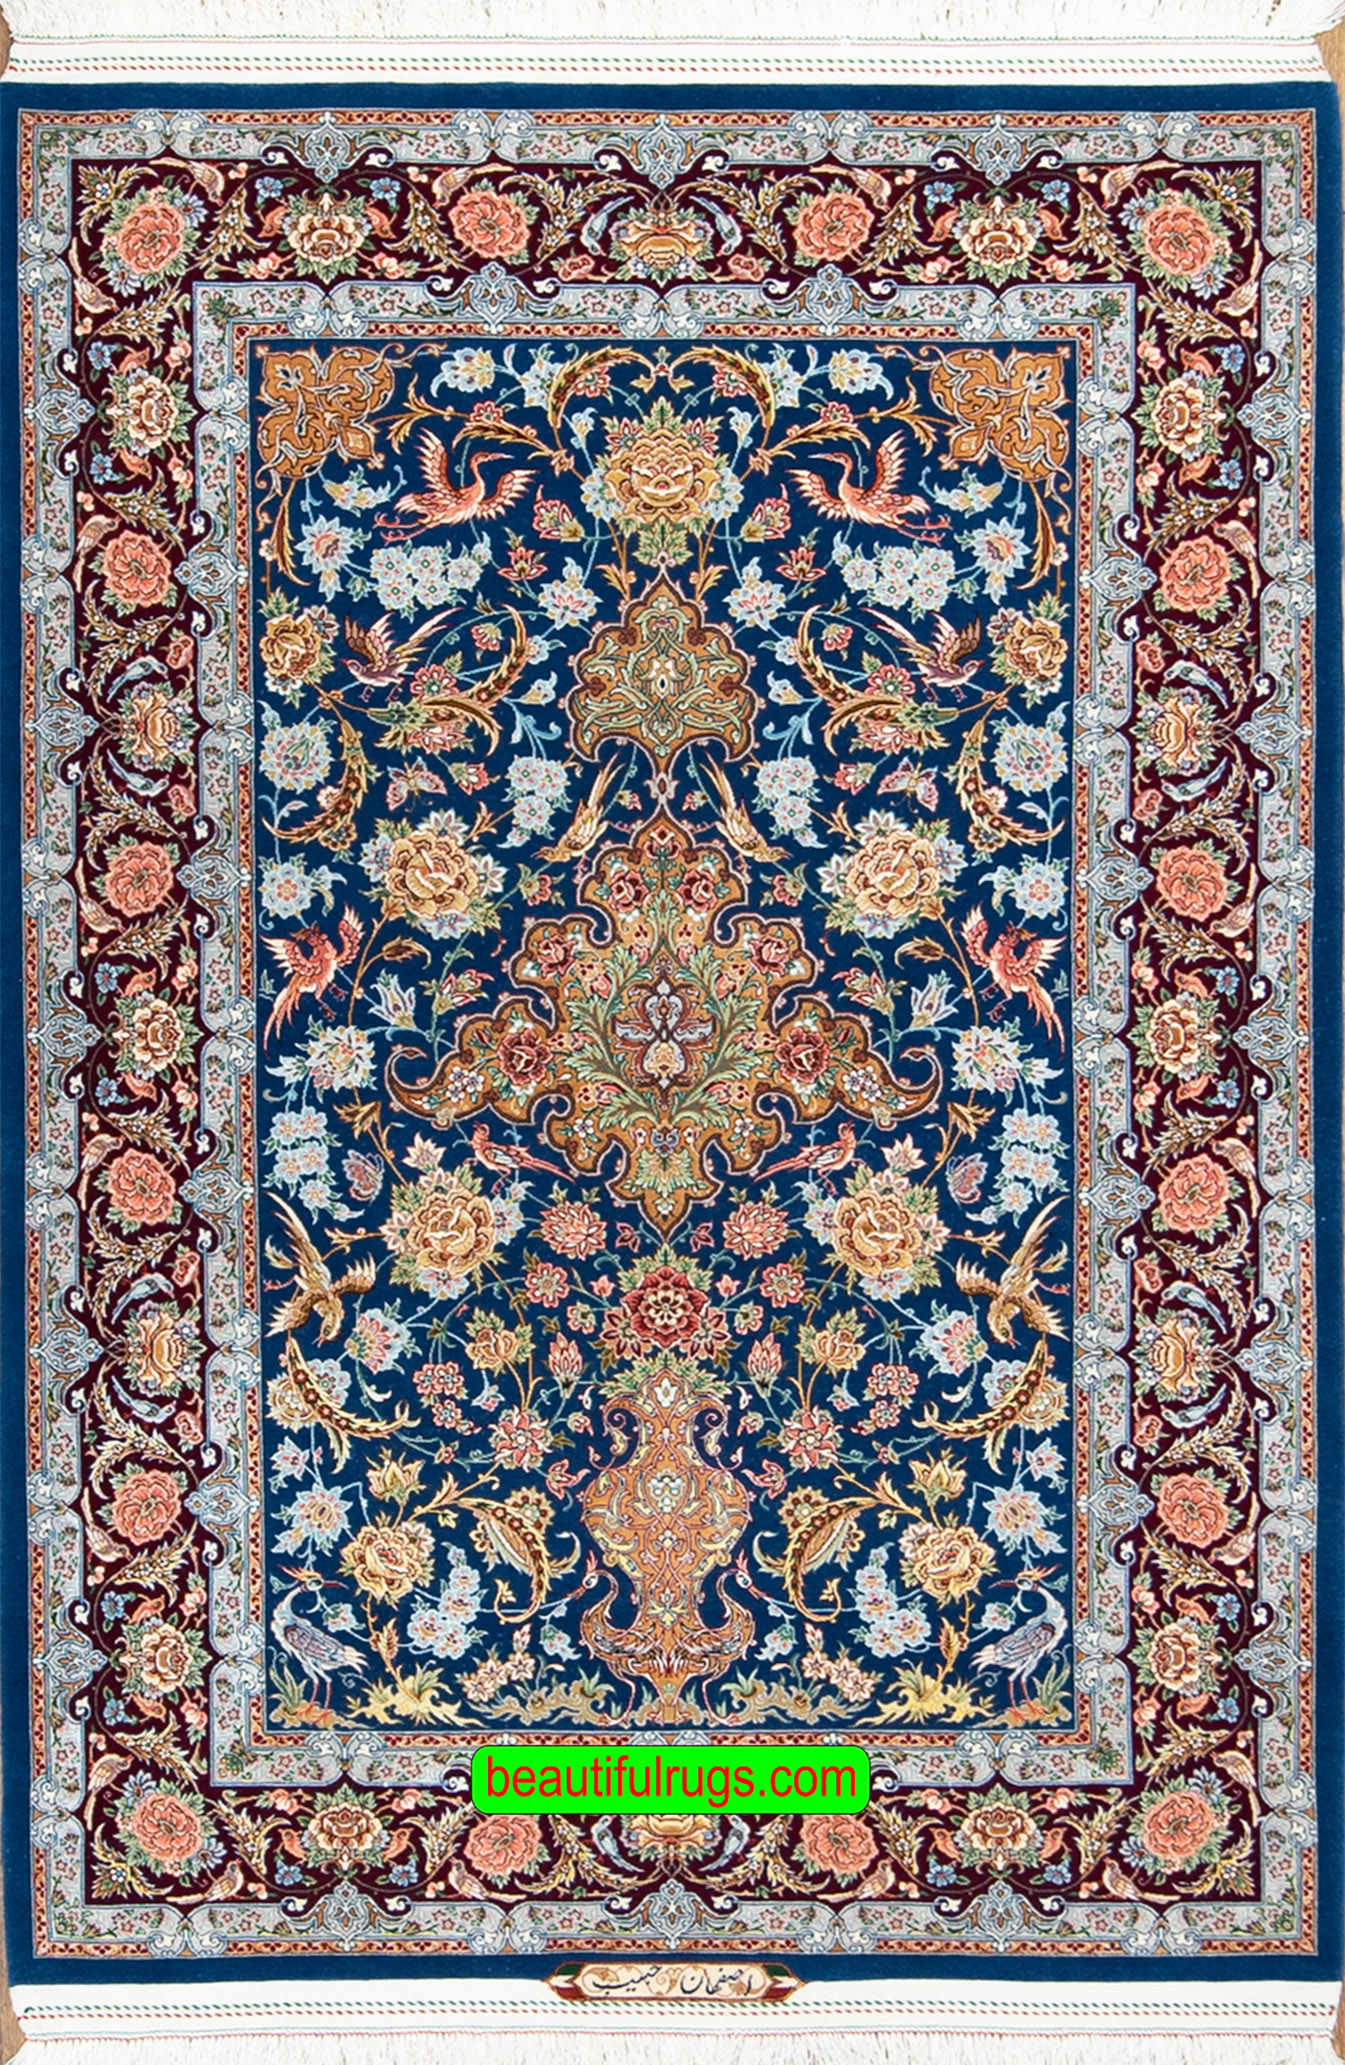 https://beautifulrugs.com/wp-content/uploads/2023/01/412-Blue-Persian-Rug-Traditional-Rugs-Natural-Dye-Persian-Isfahan-Rug.jpg